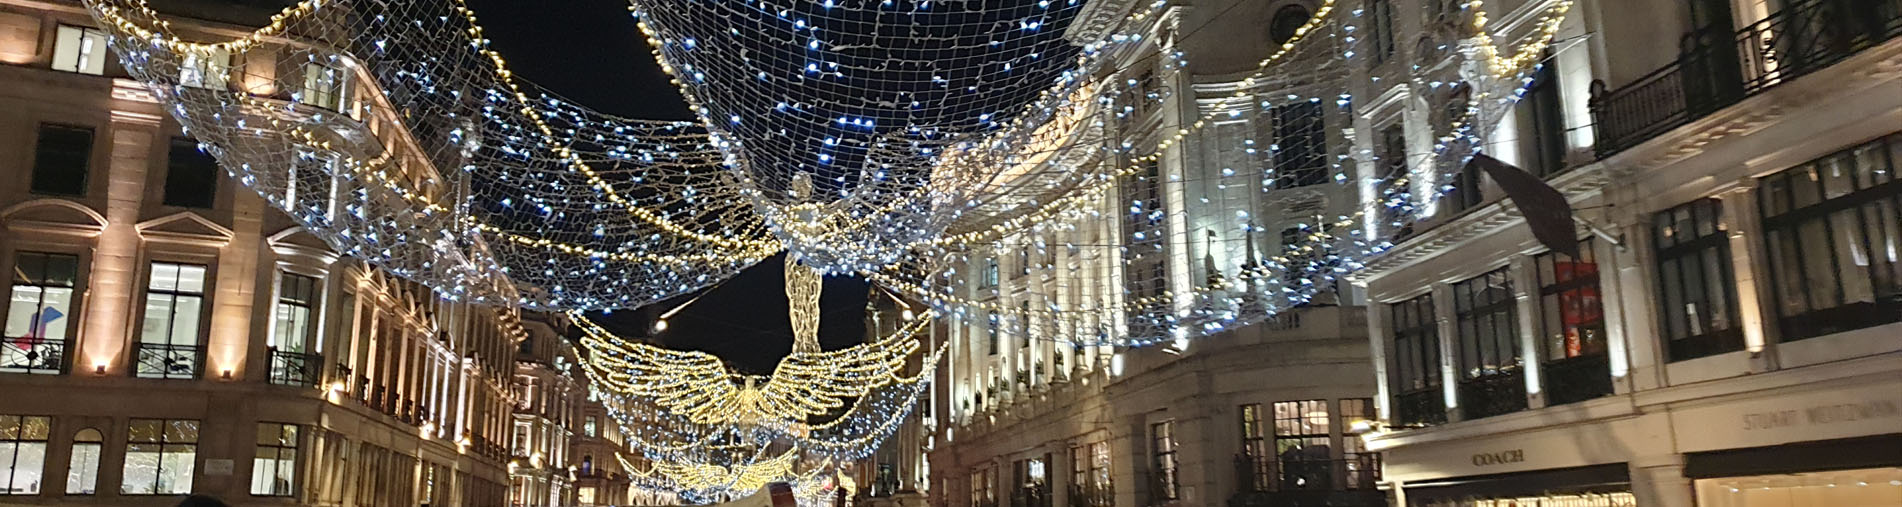 Regent St Christmas Lights